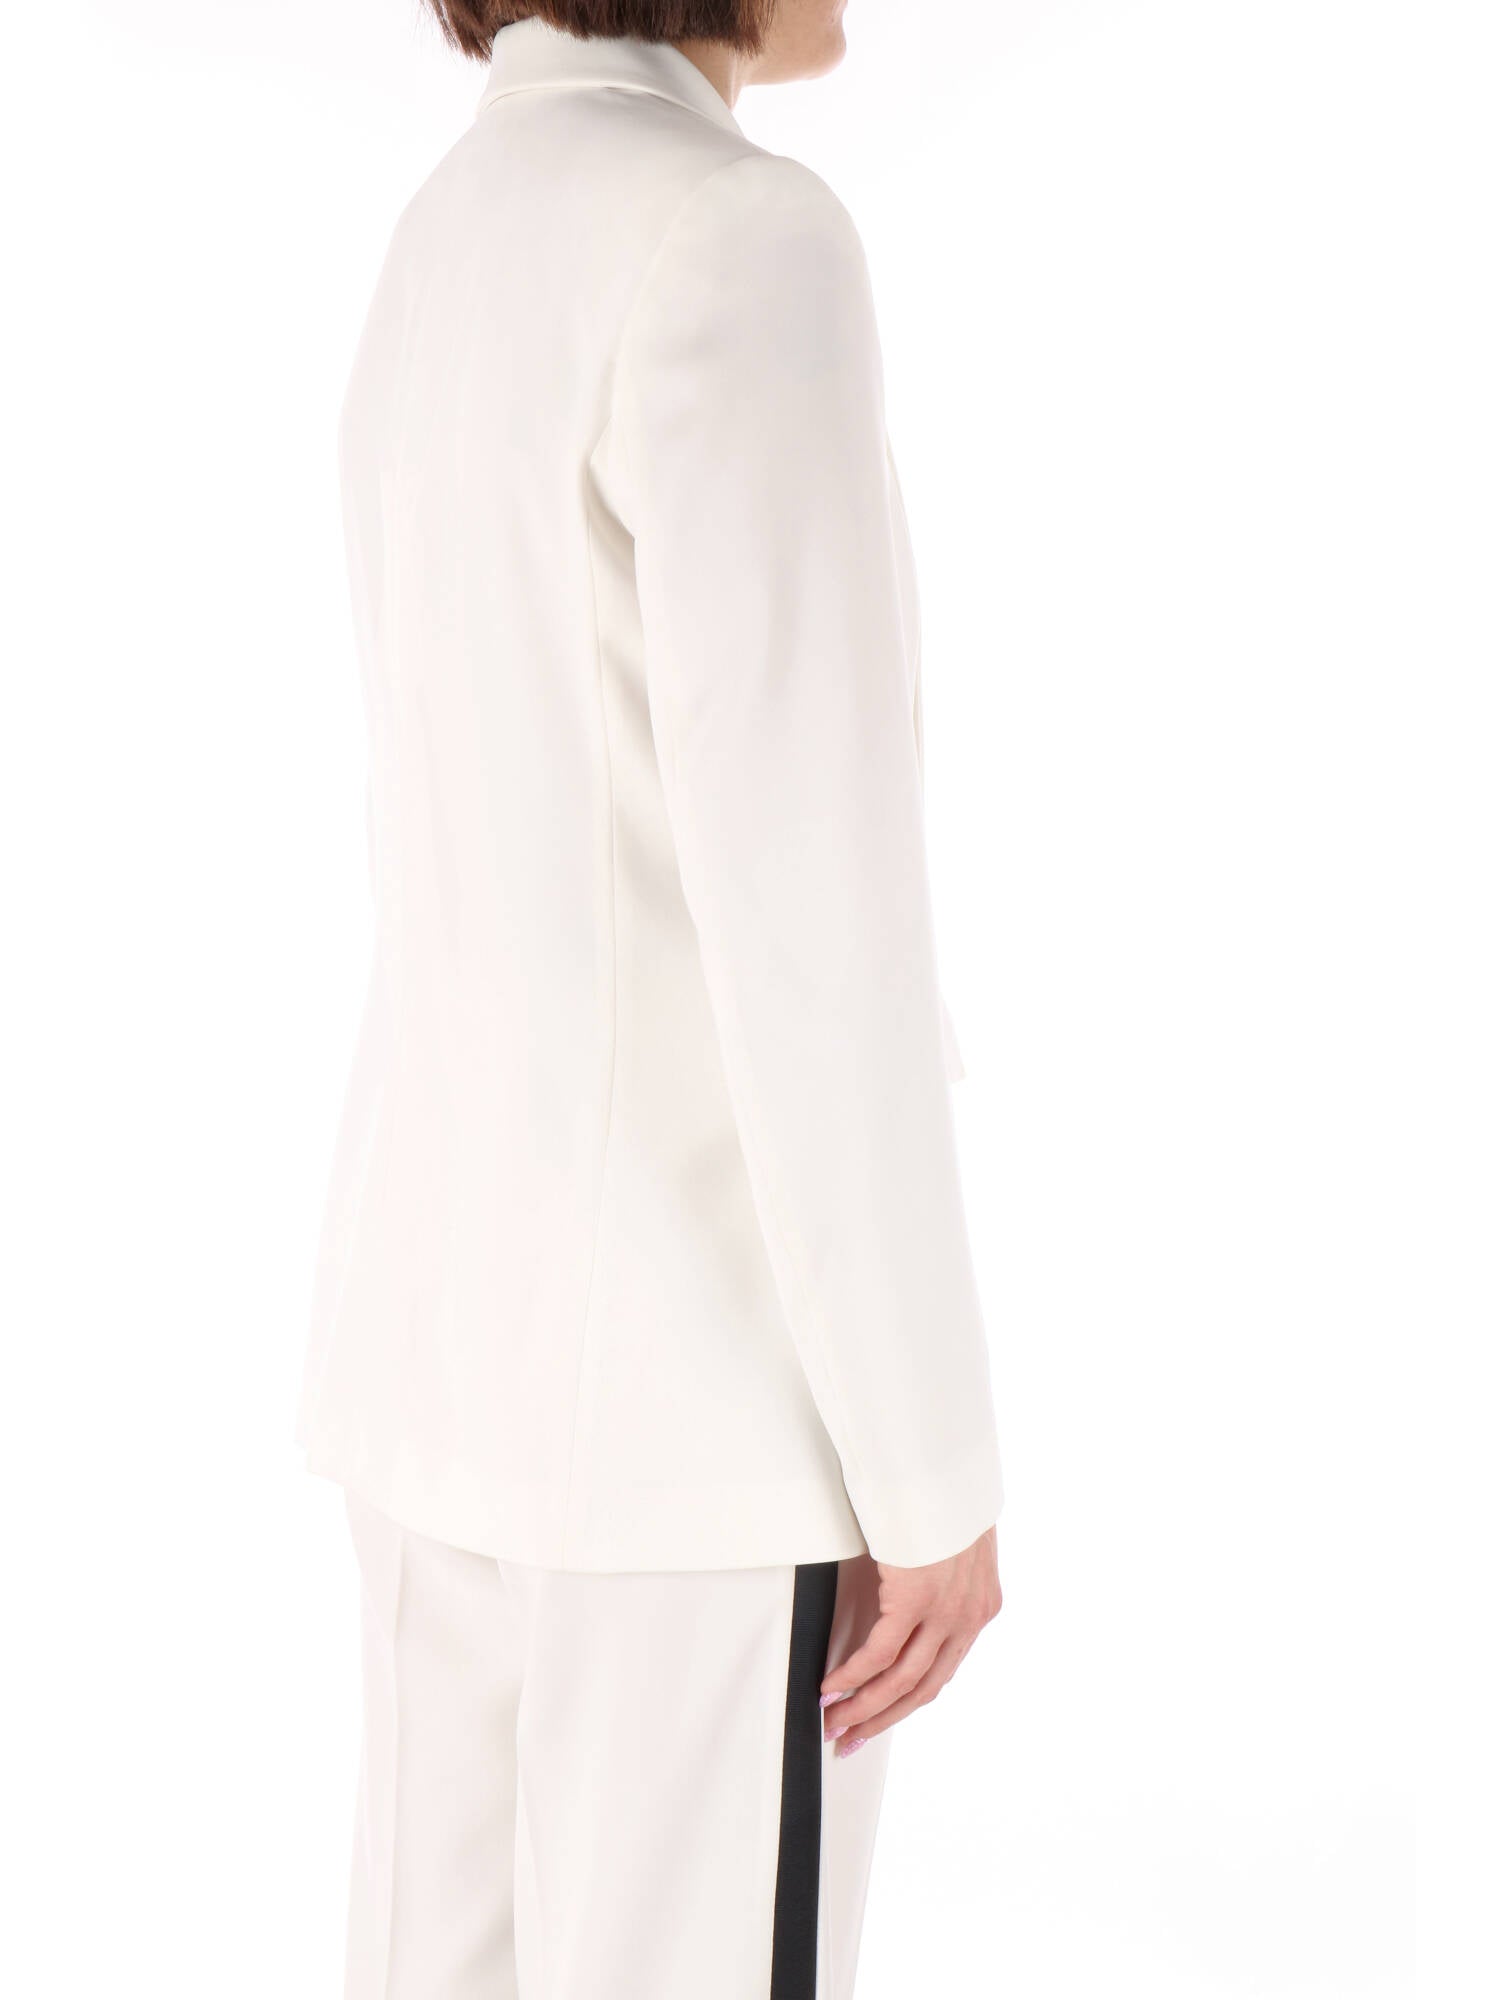 Kocca giacca elegante bianca con tasche